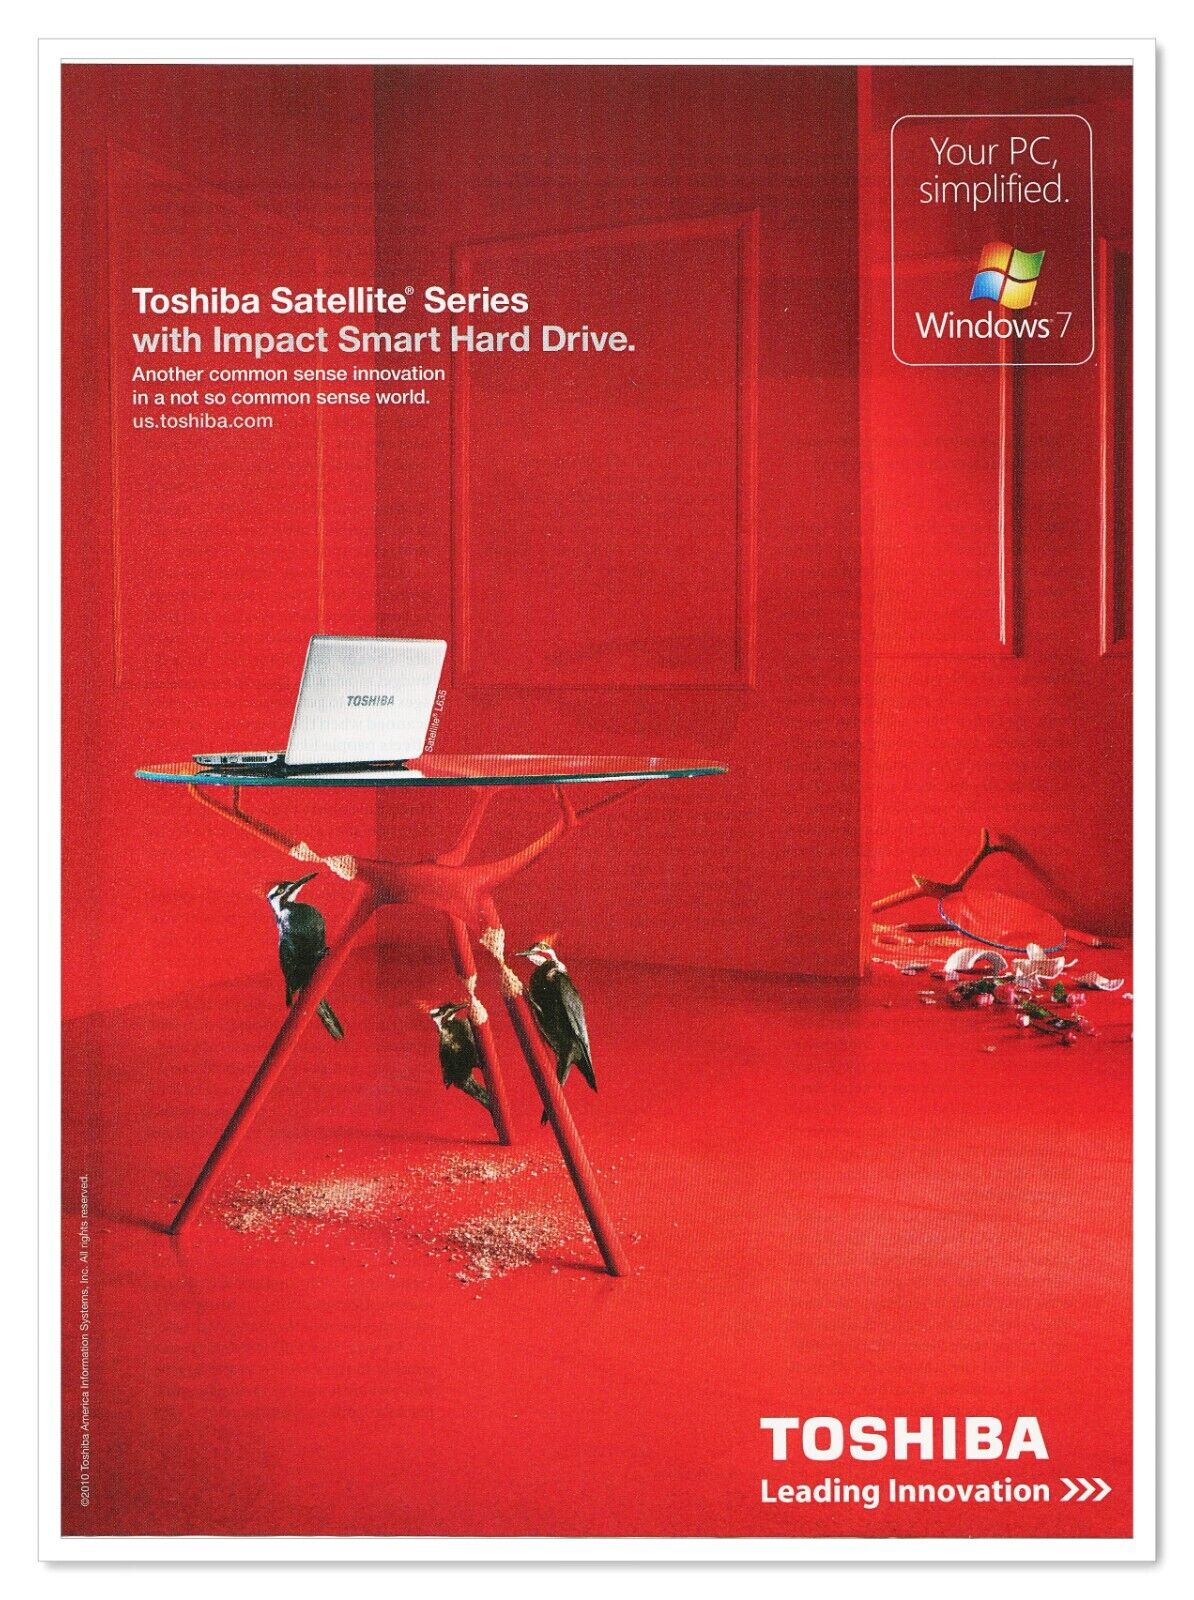 Toshiba Satellite Laptop Computer Woodpeckers 2011 Full-Page Print Magazine Ad